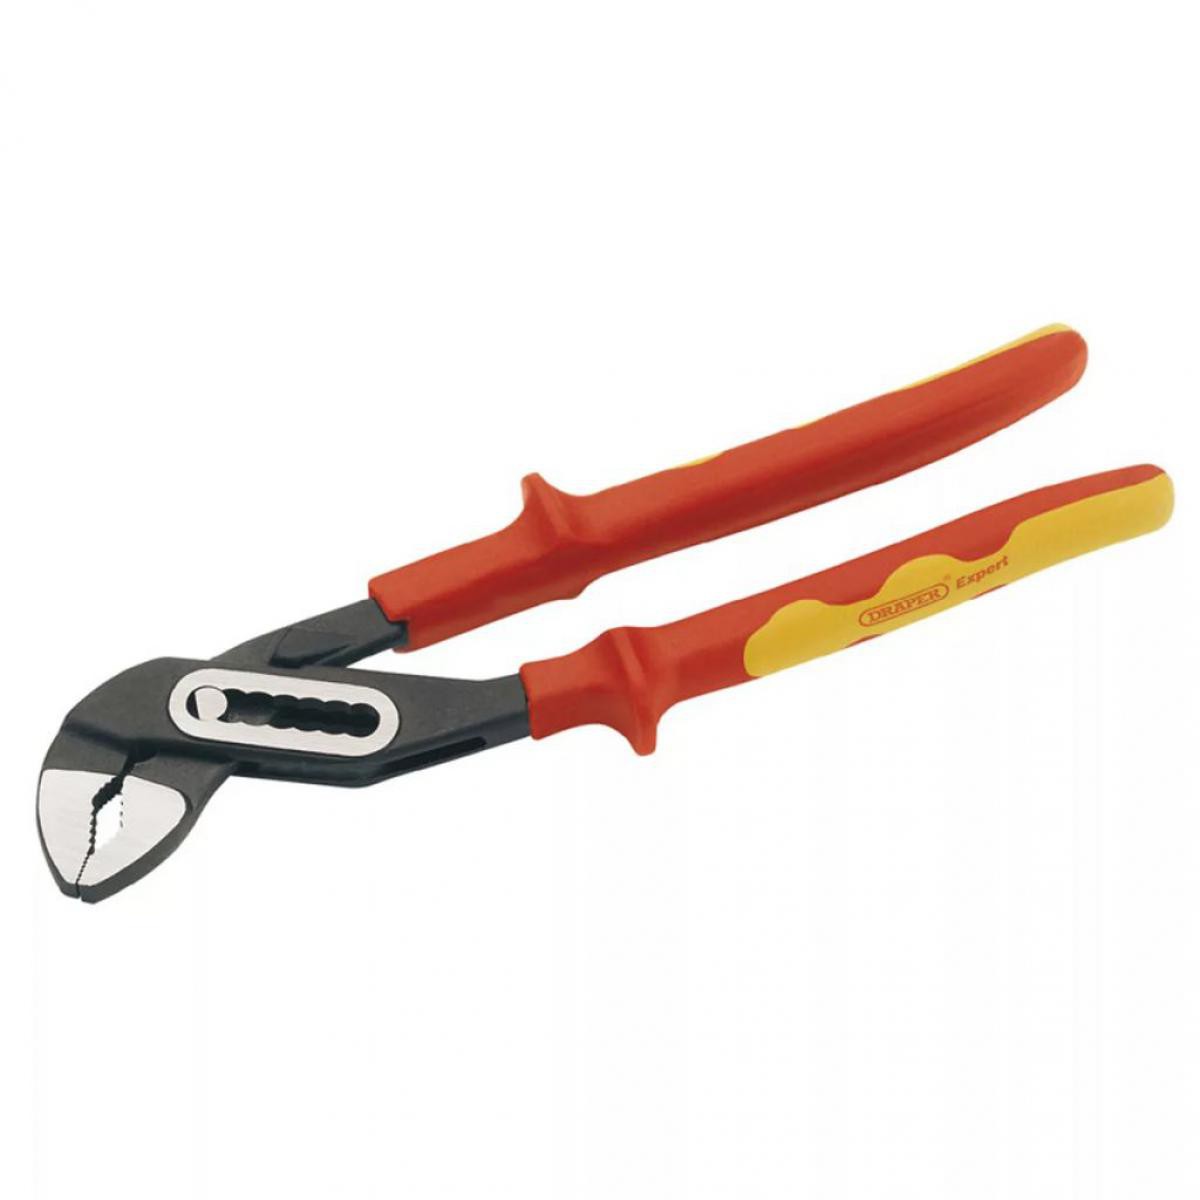 Draper Tools - Draper Tools Expert Pinces à languette et rainure isolée VDE 69184 - Accessoires barbecue